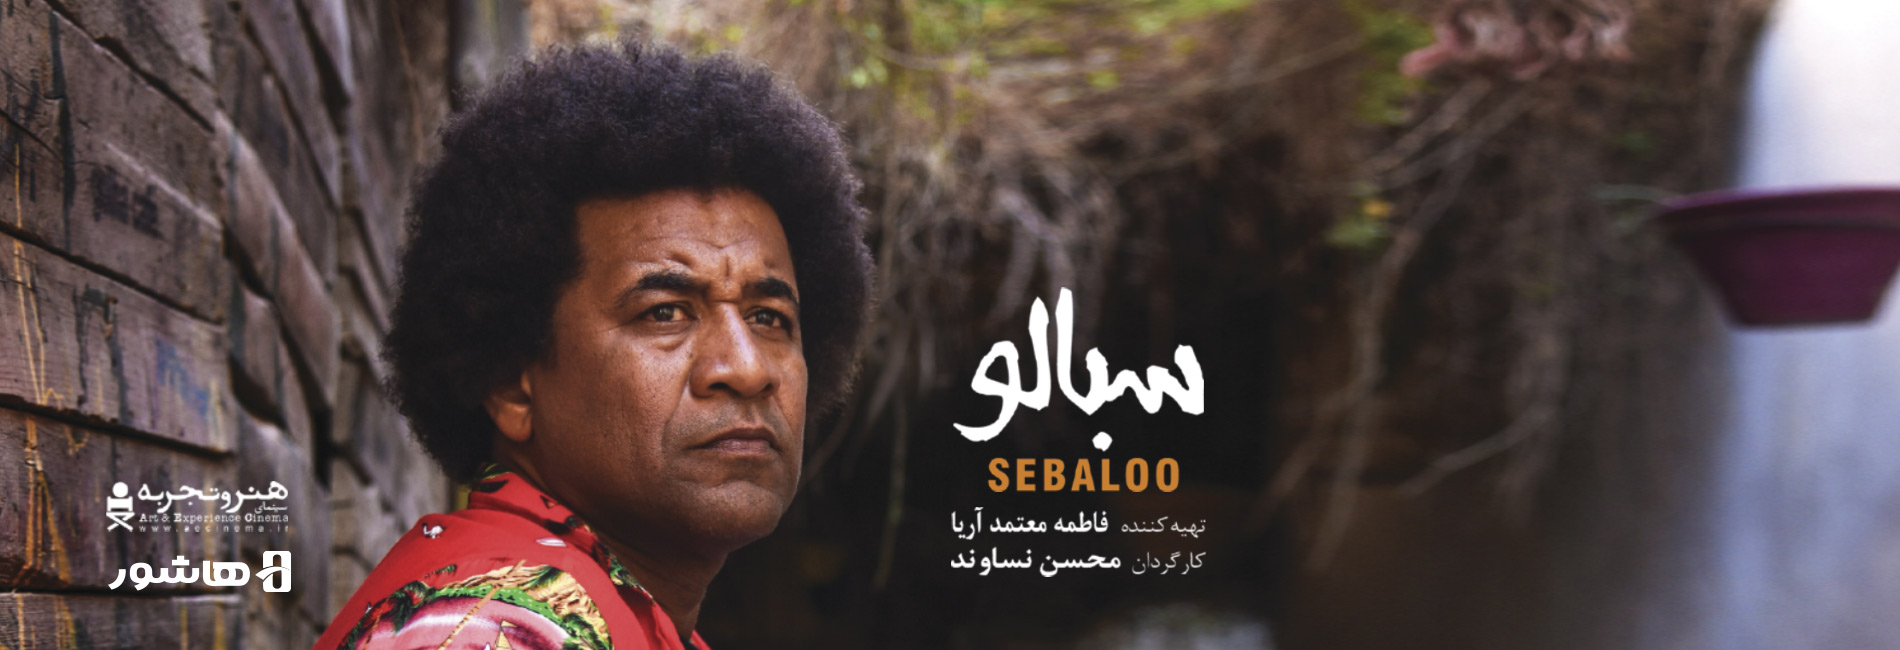 Sebaloo-هاشور